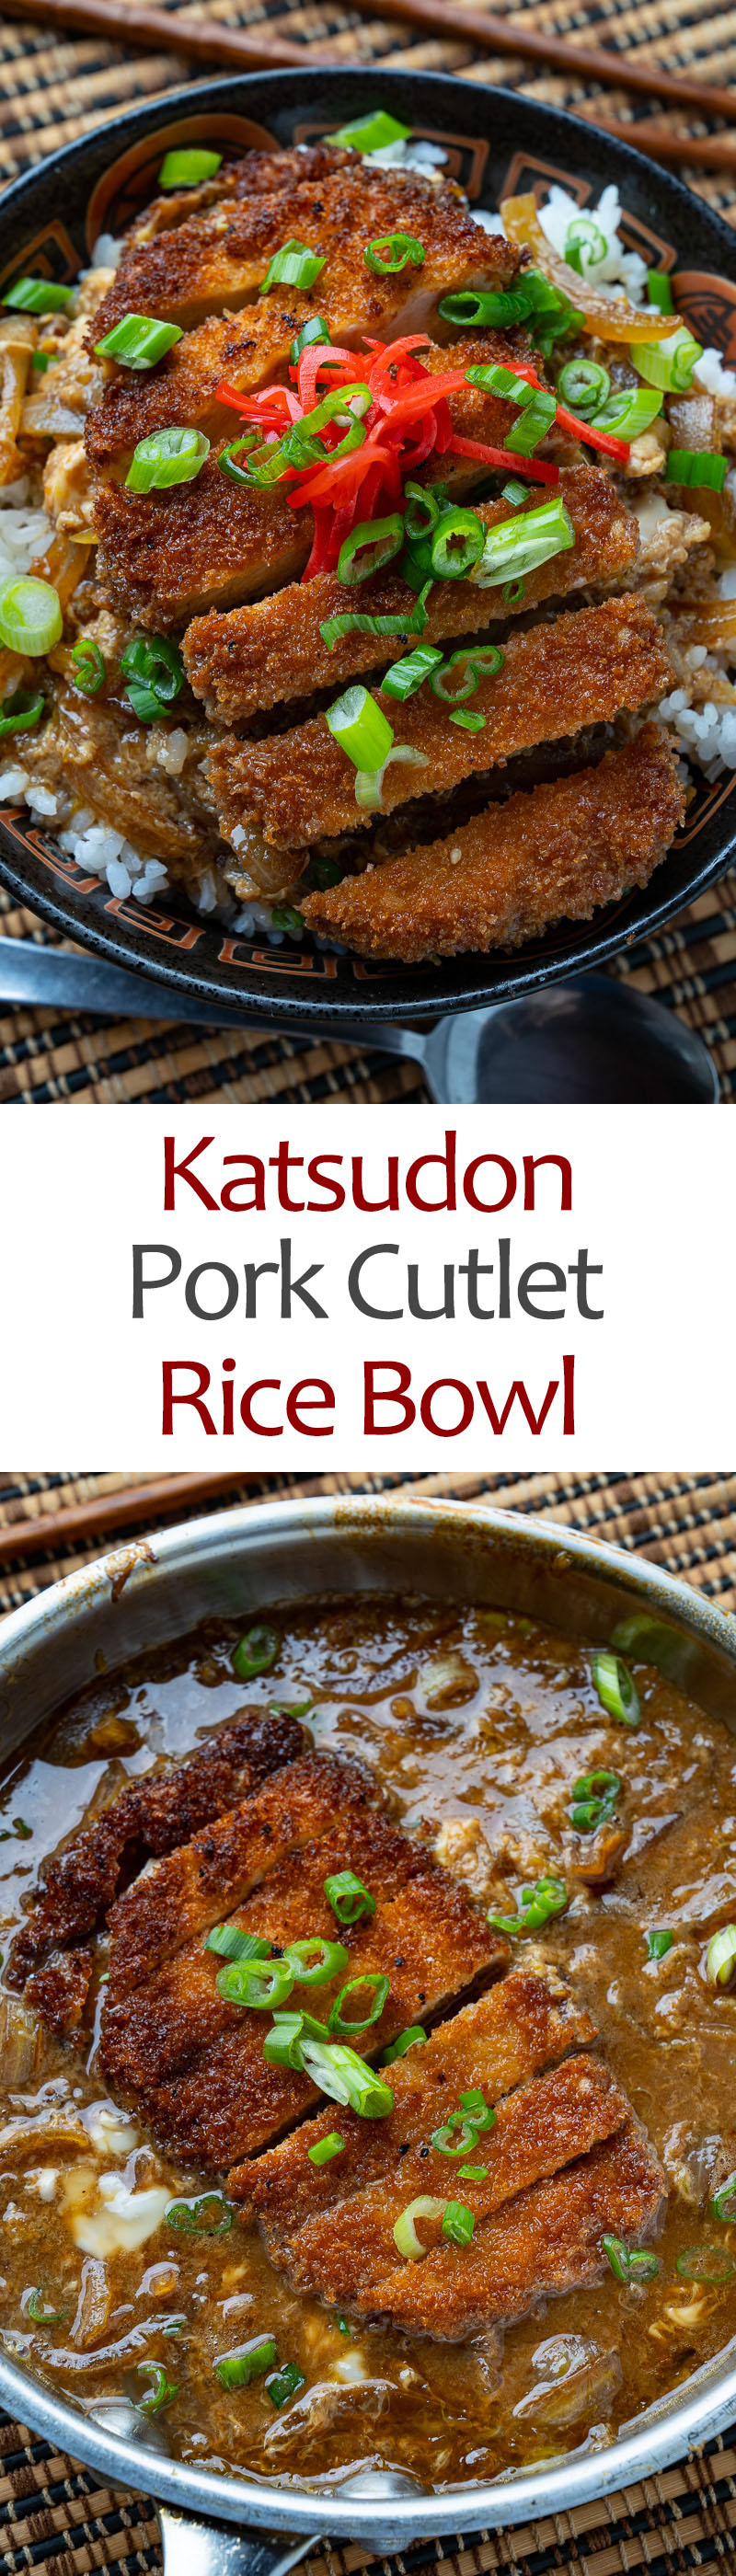 Katsudon (Japanese Pork Cutlet Rice Bowl)